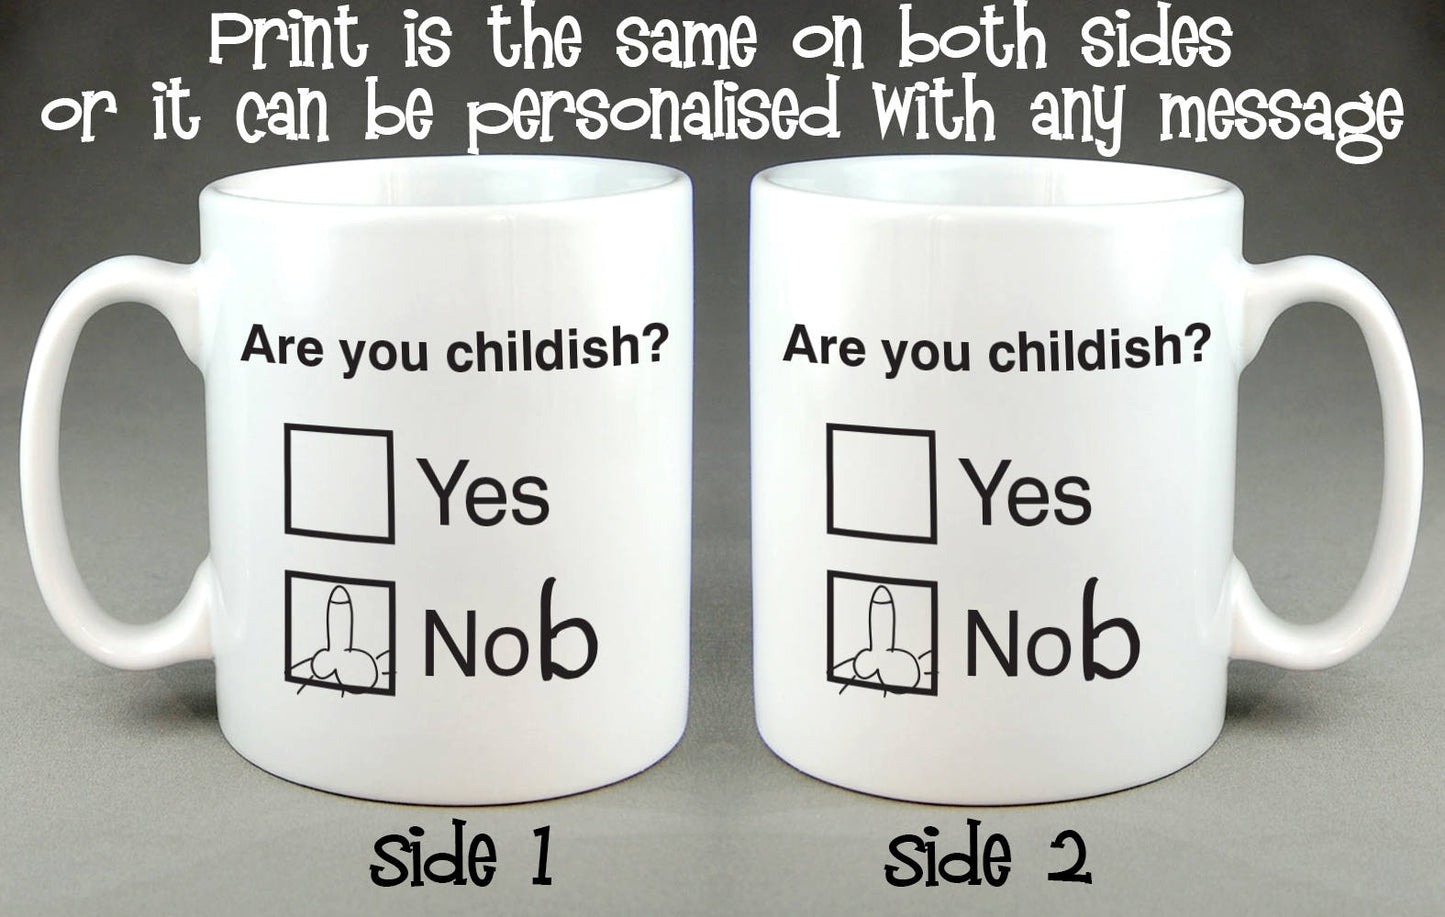 Are You Childish - Yes No(b) Mug